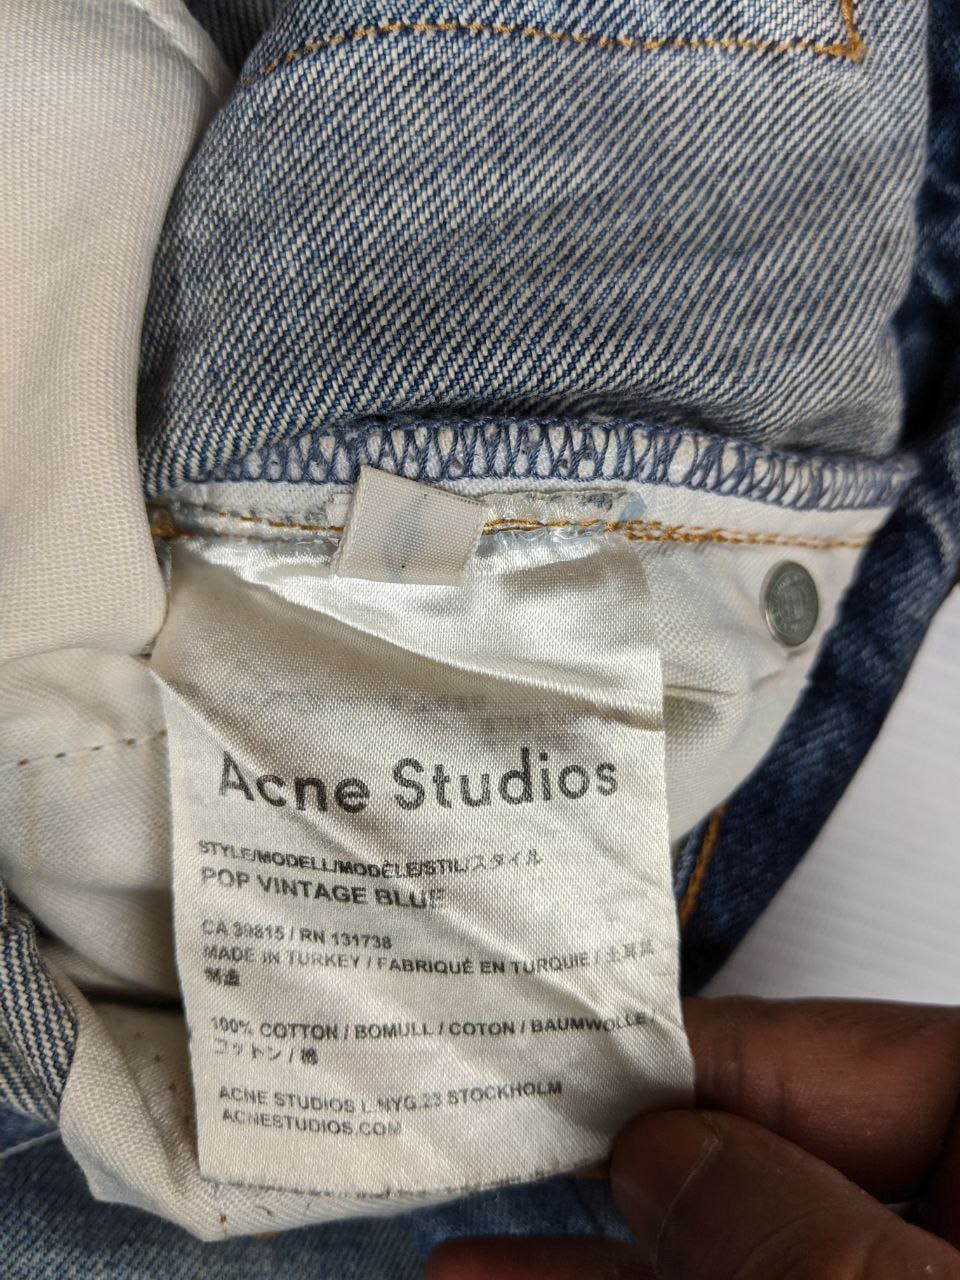 Acne Studios Distressed Denim Pop Vintage Blue - 9